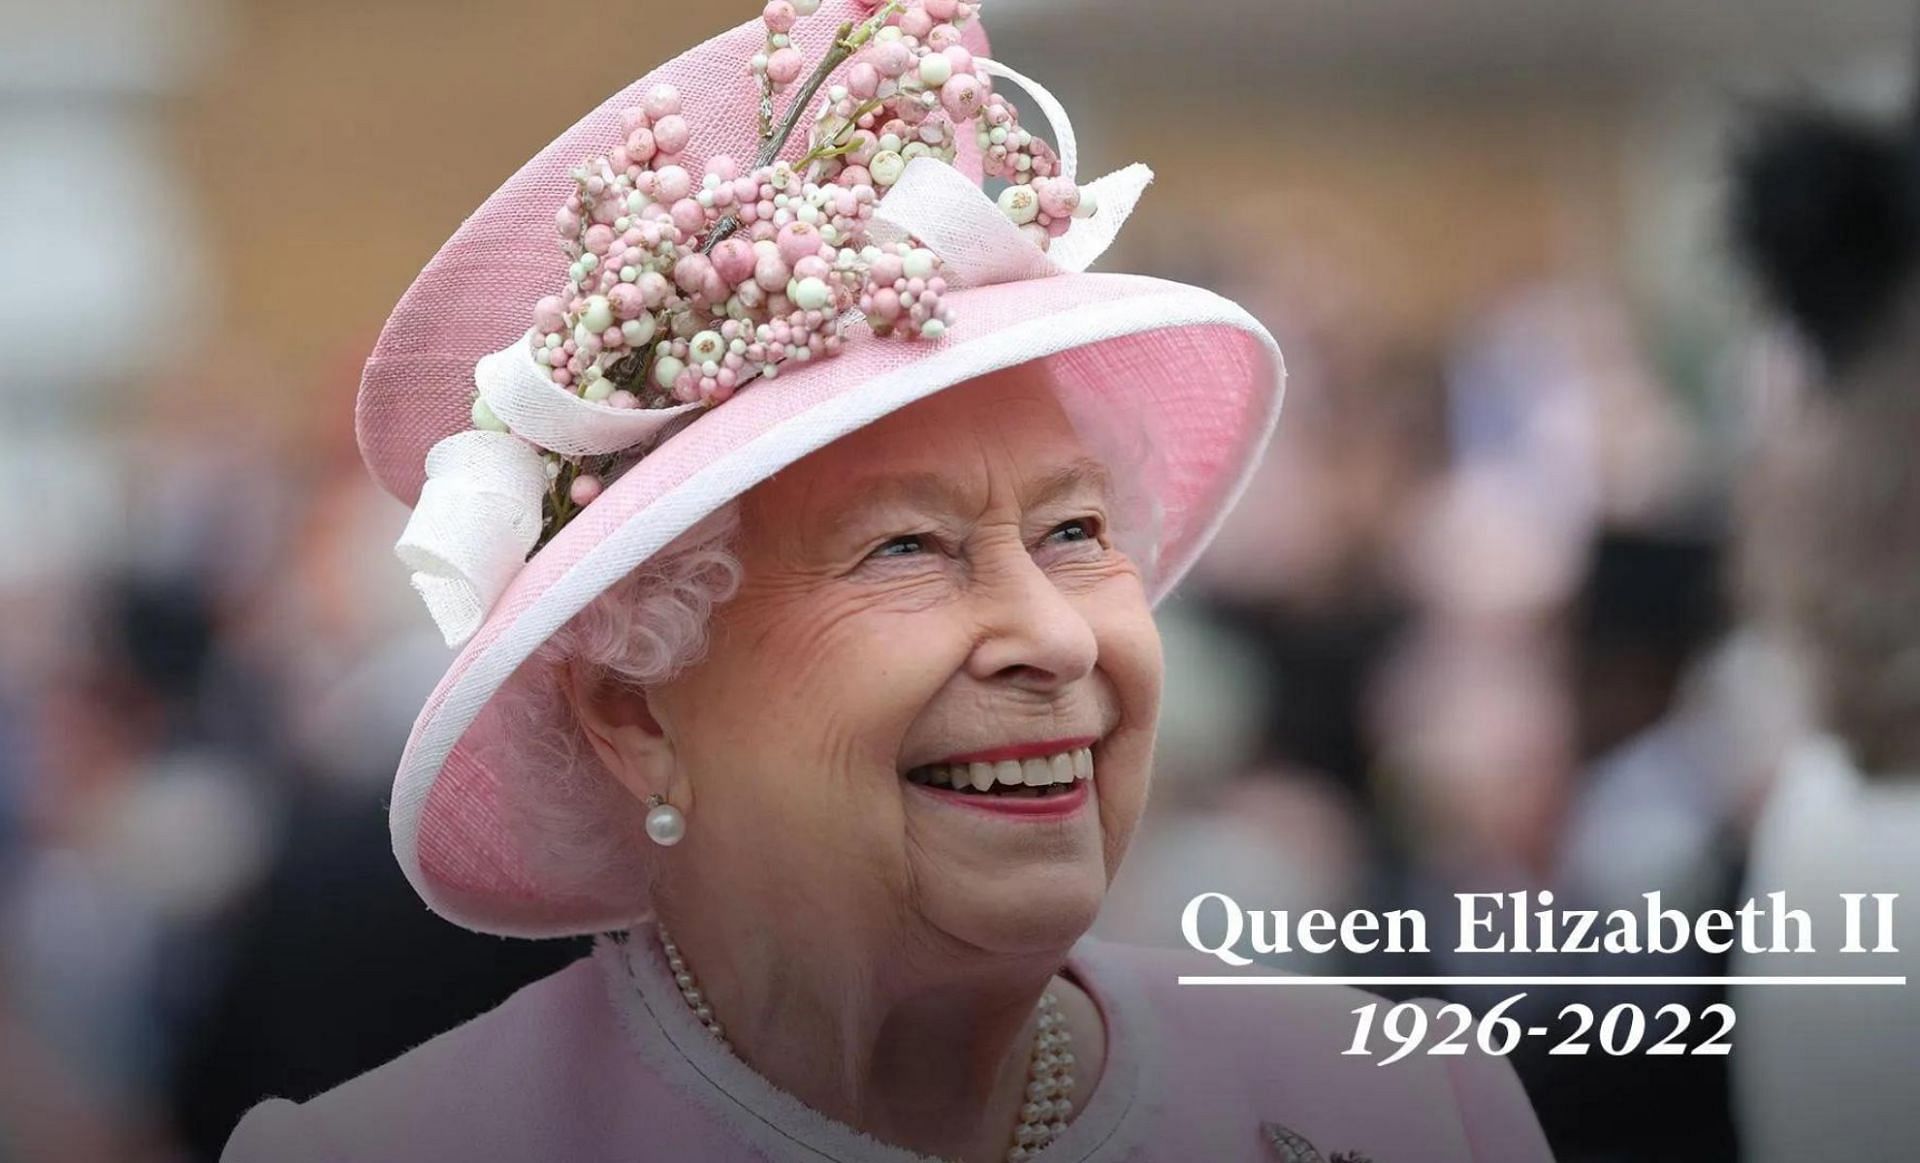 Queen Elizabeth II Fortnite skin: True or hoax?